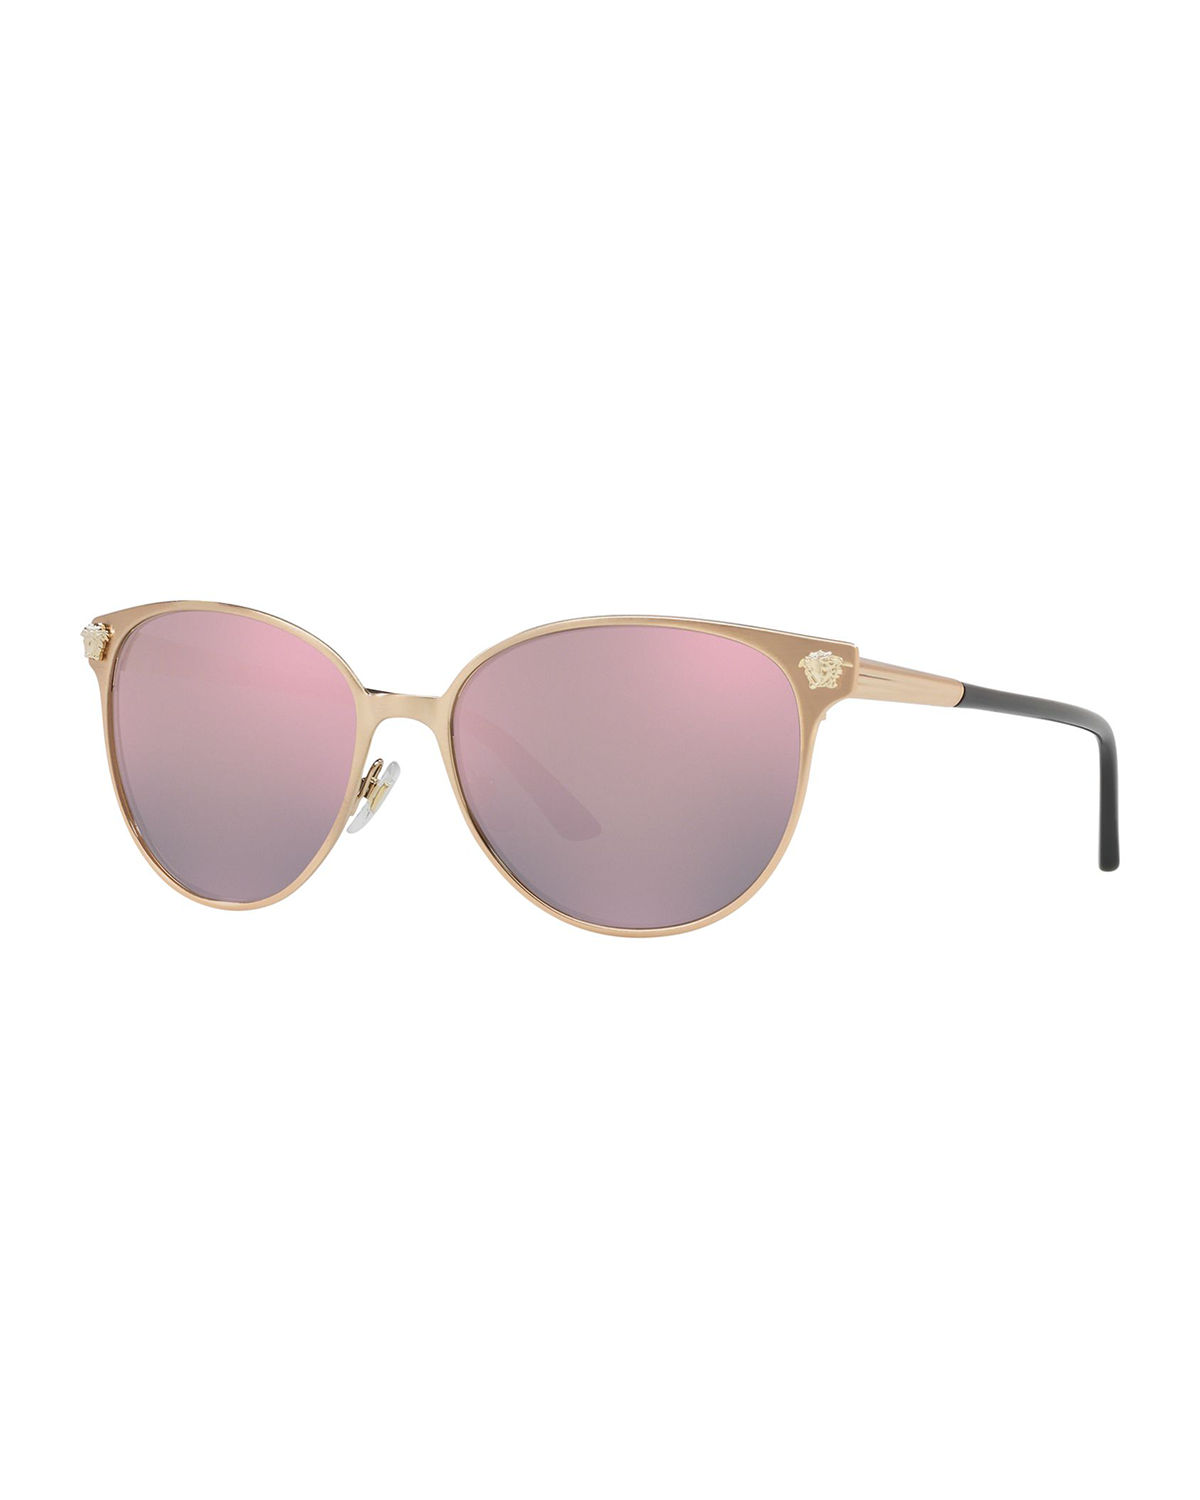 Versace Glam Medusa 57mm Cat Eye Sunglasses - Pink/ Gold Mirror | ModeSens